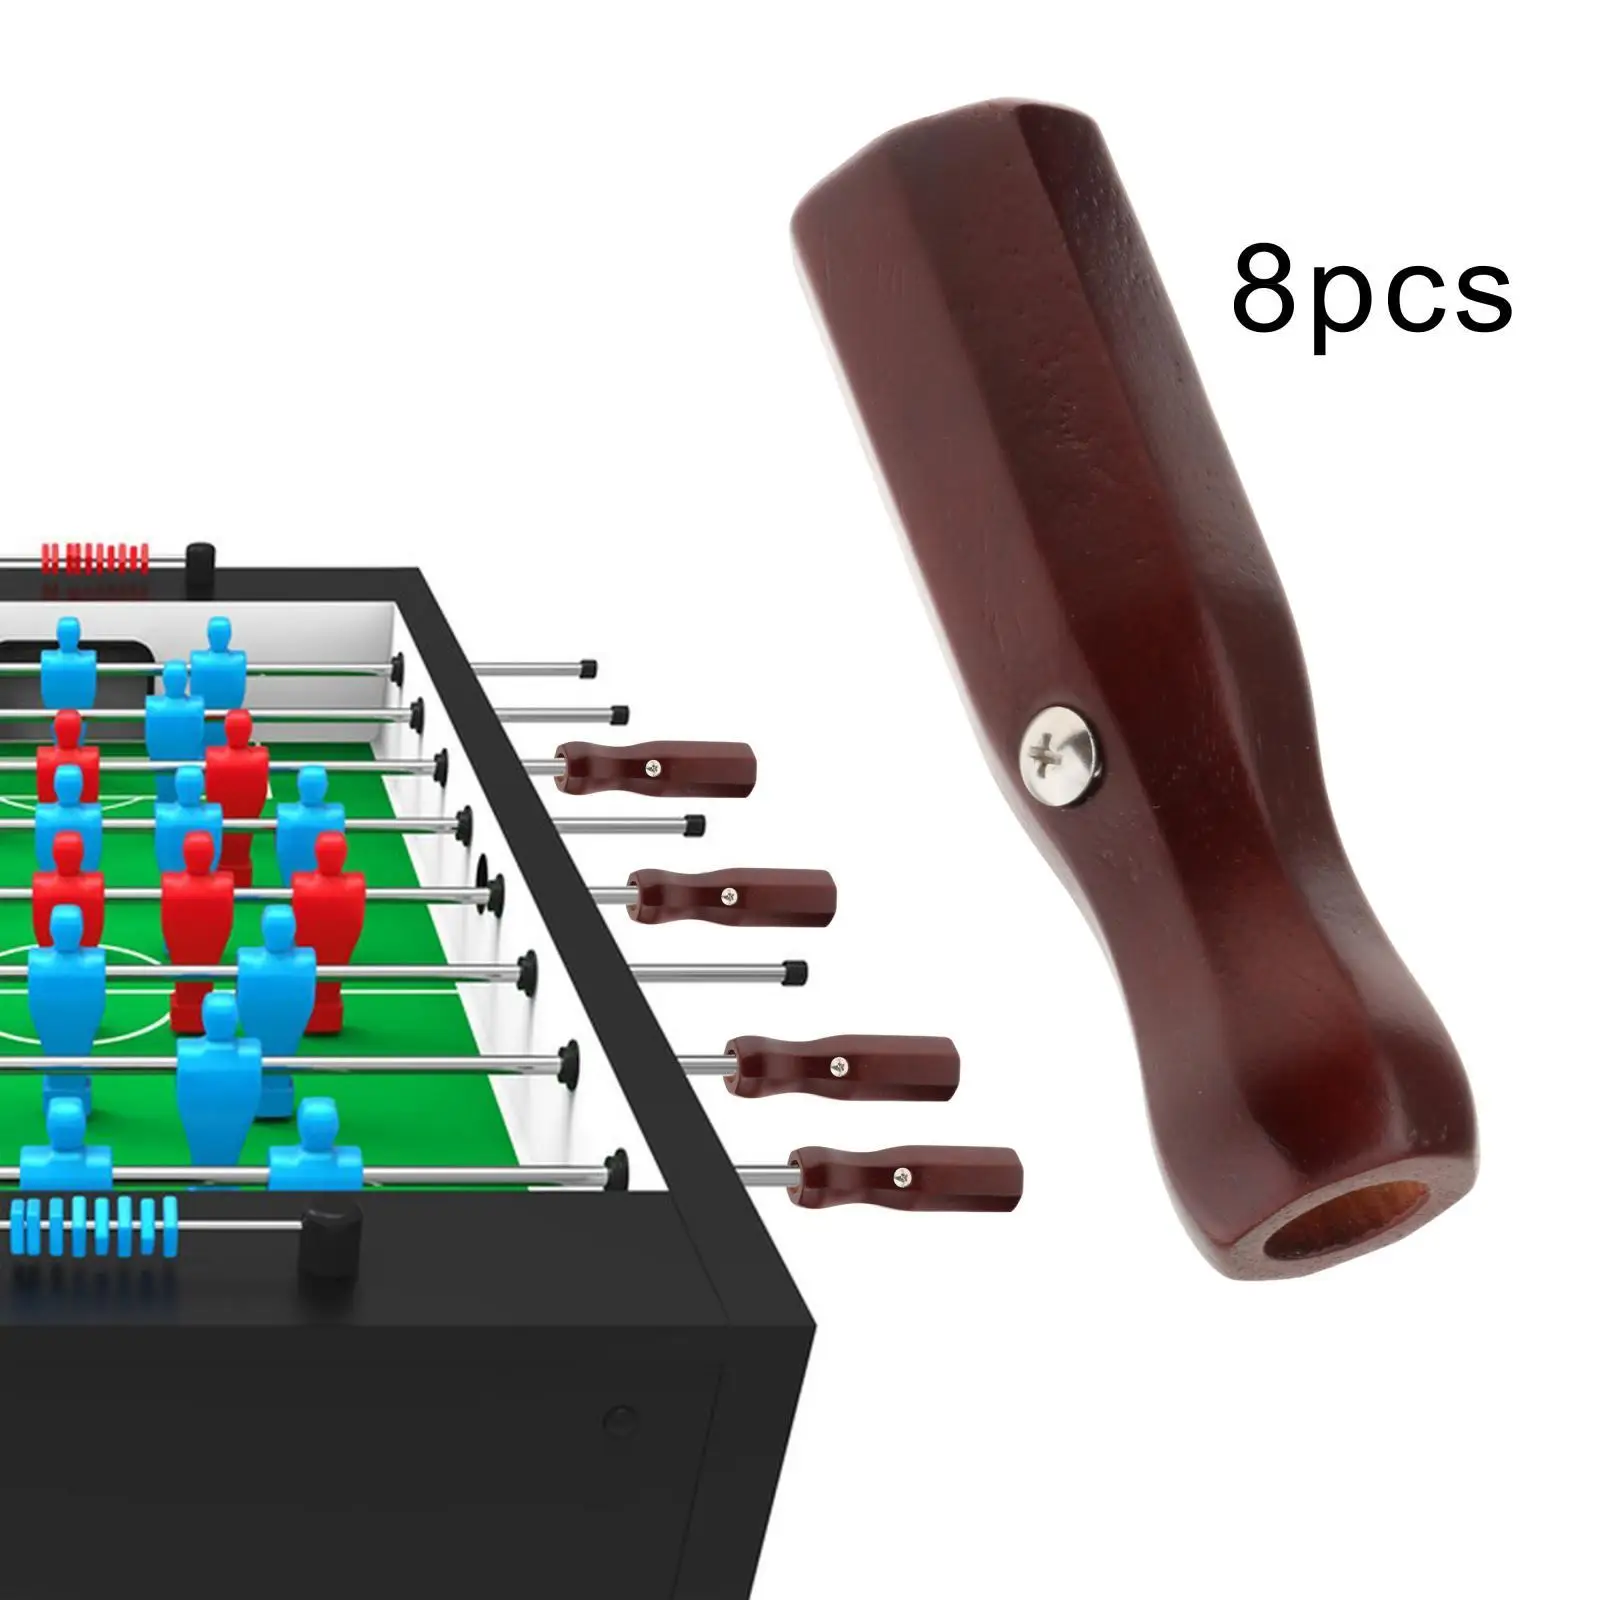 8Pcs Soccer Table Handles Nonslip Grip 16mm Hole Foosball Table Rod End Caps